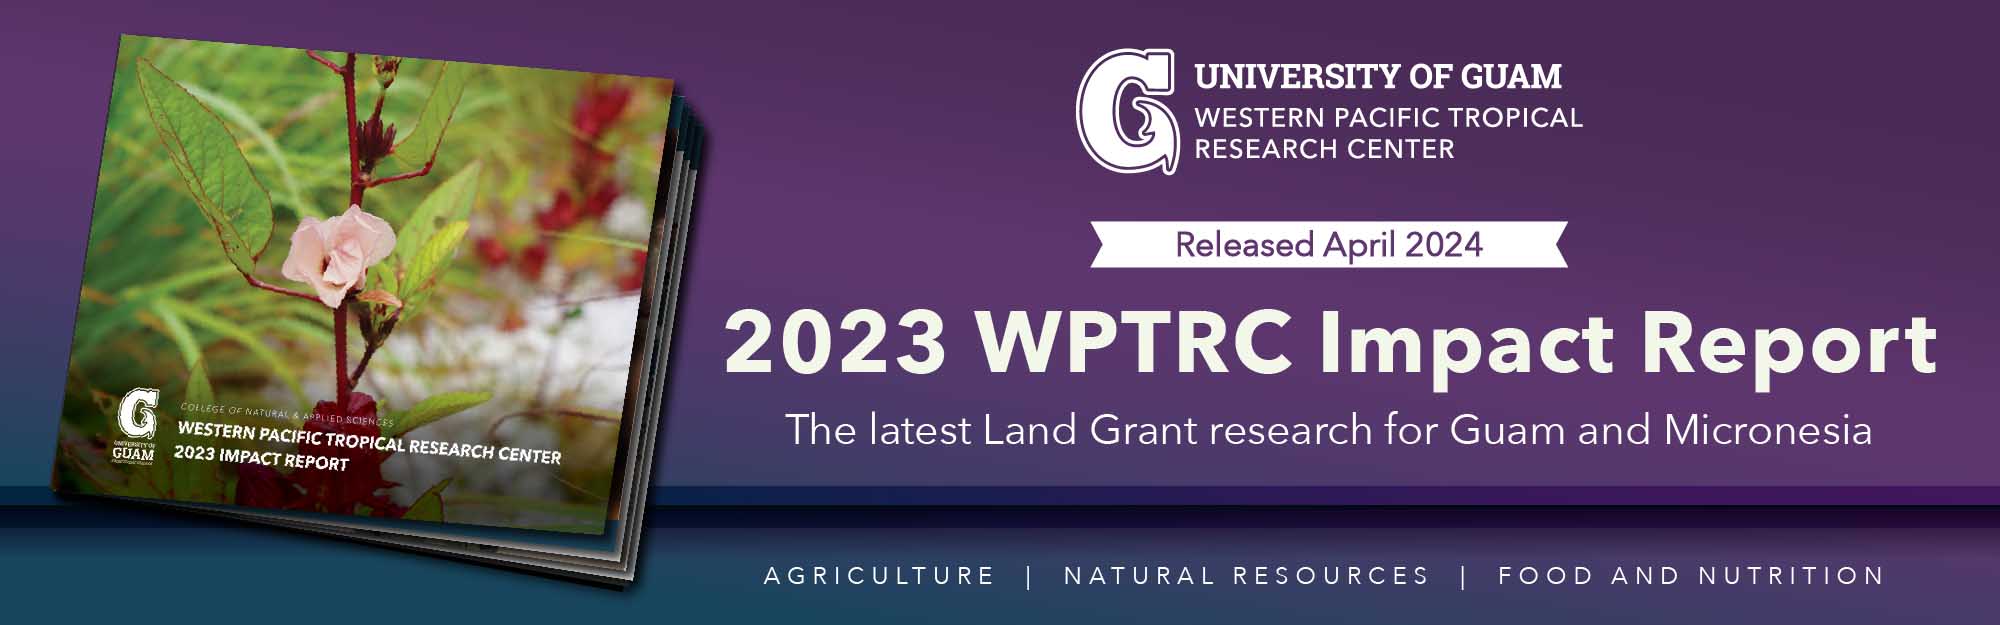 2023 WPTRC Impact Report banner